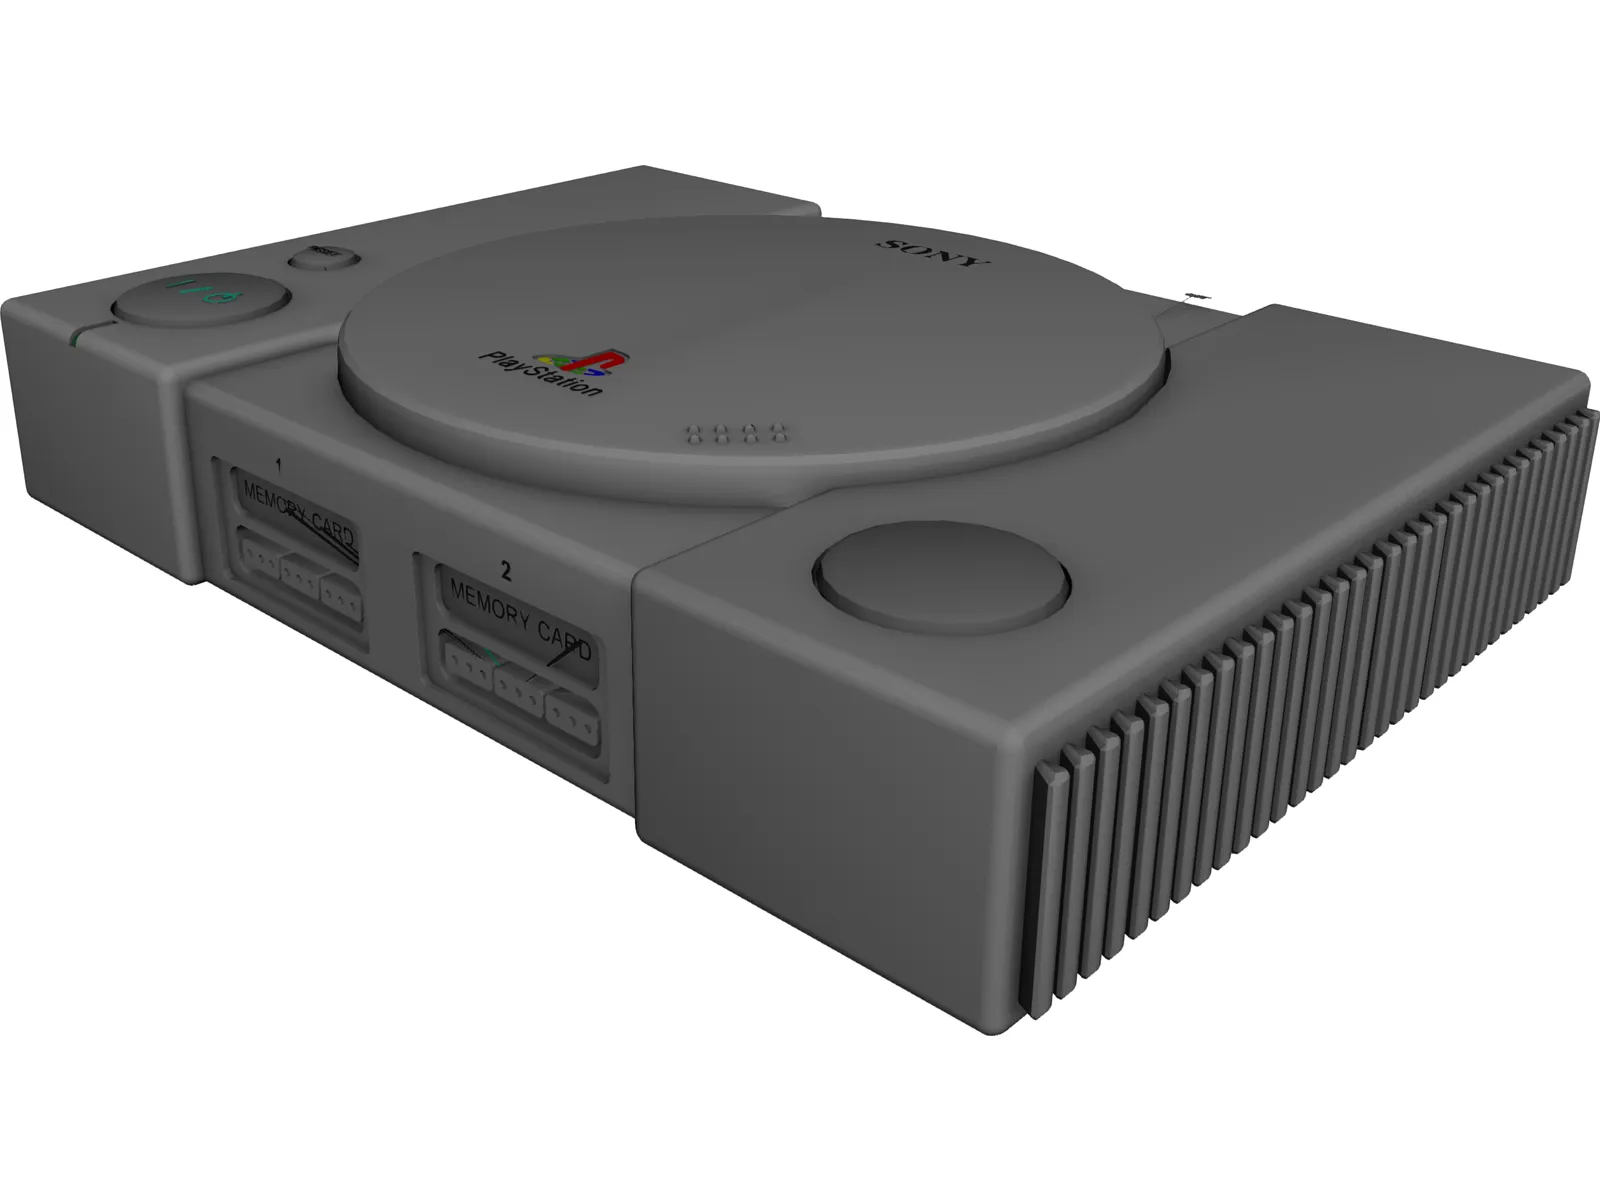 Playstation 3D Model - 3D CAD Browser